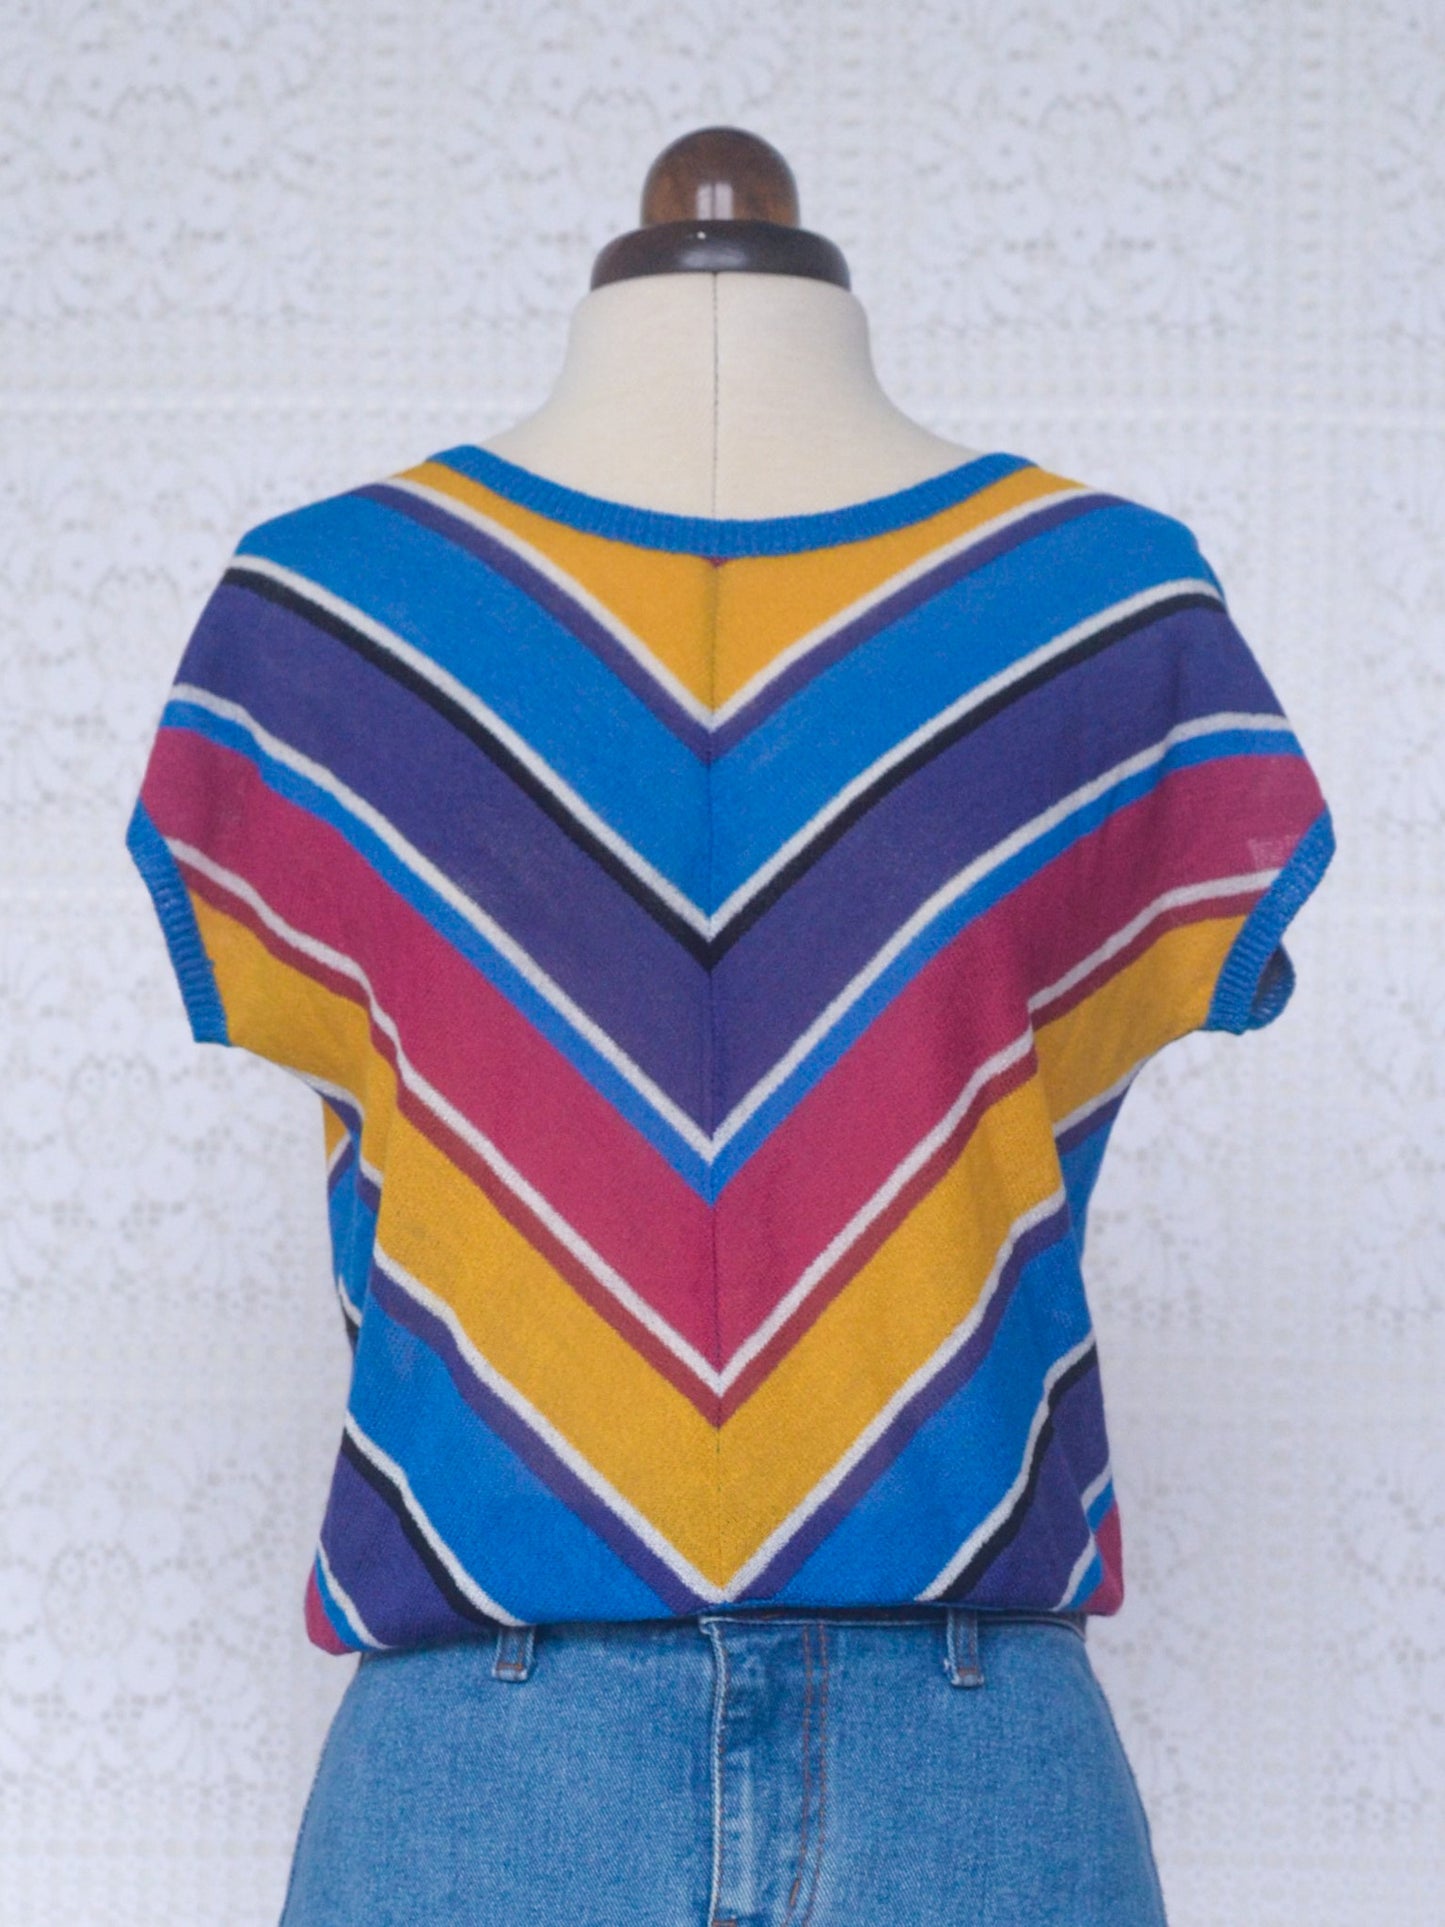 1980s style blue, purple, pink and yellow chevron sleeveless jumper